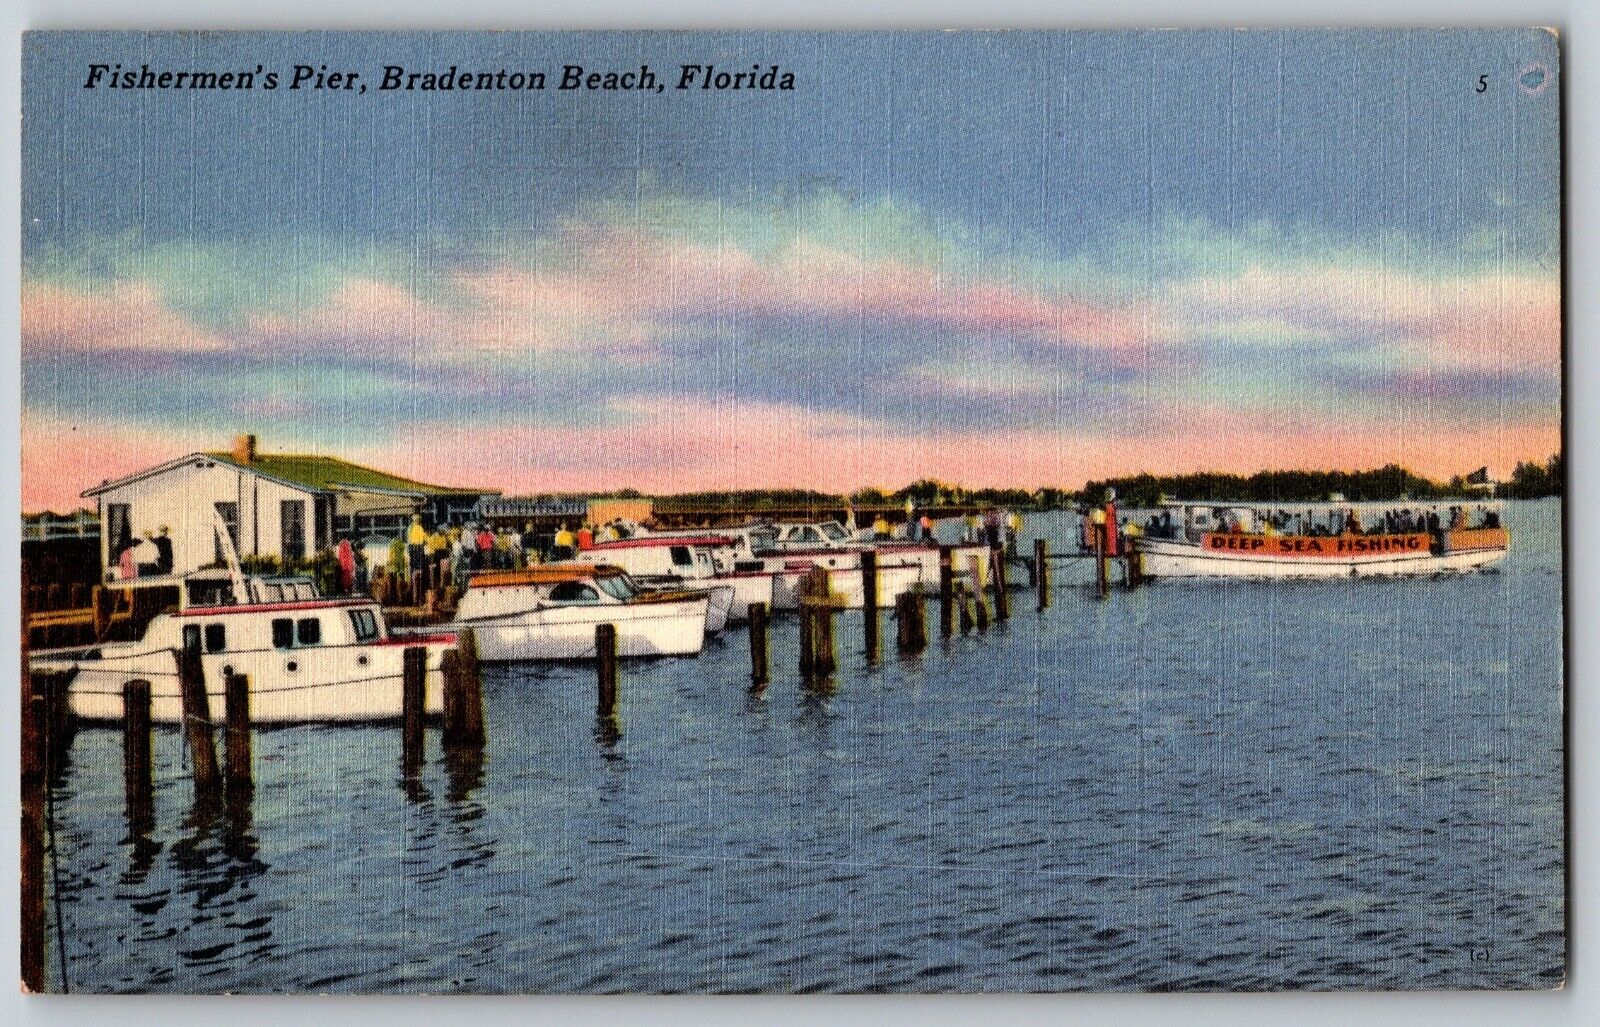 Bradenton Beach, Florida FL - Fisherman's Pier - Vintage Postcard - Unposted